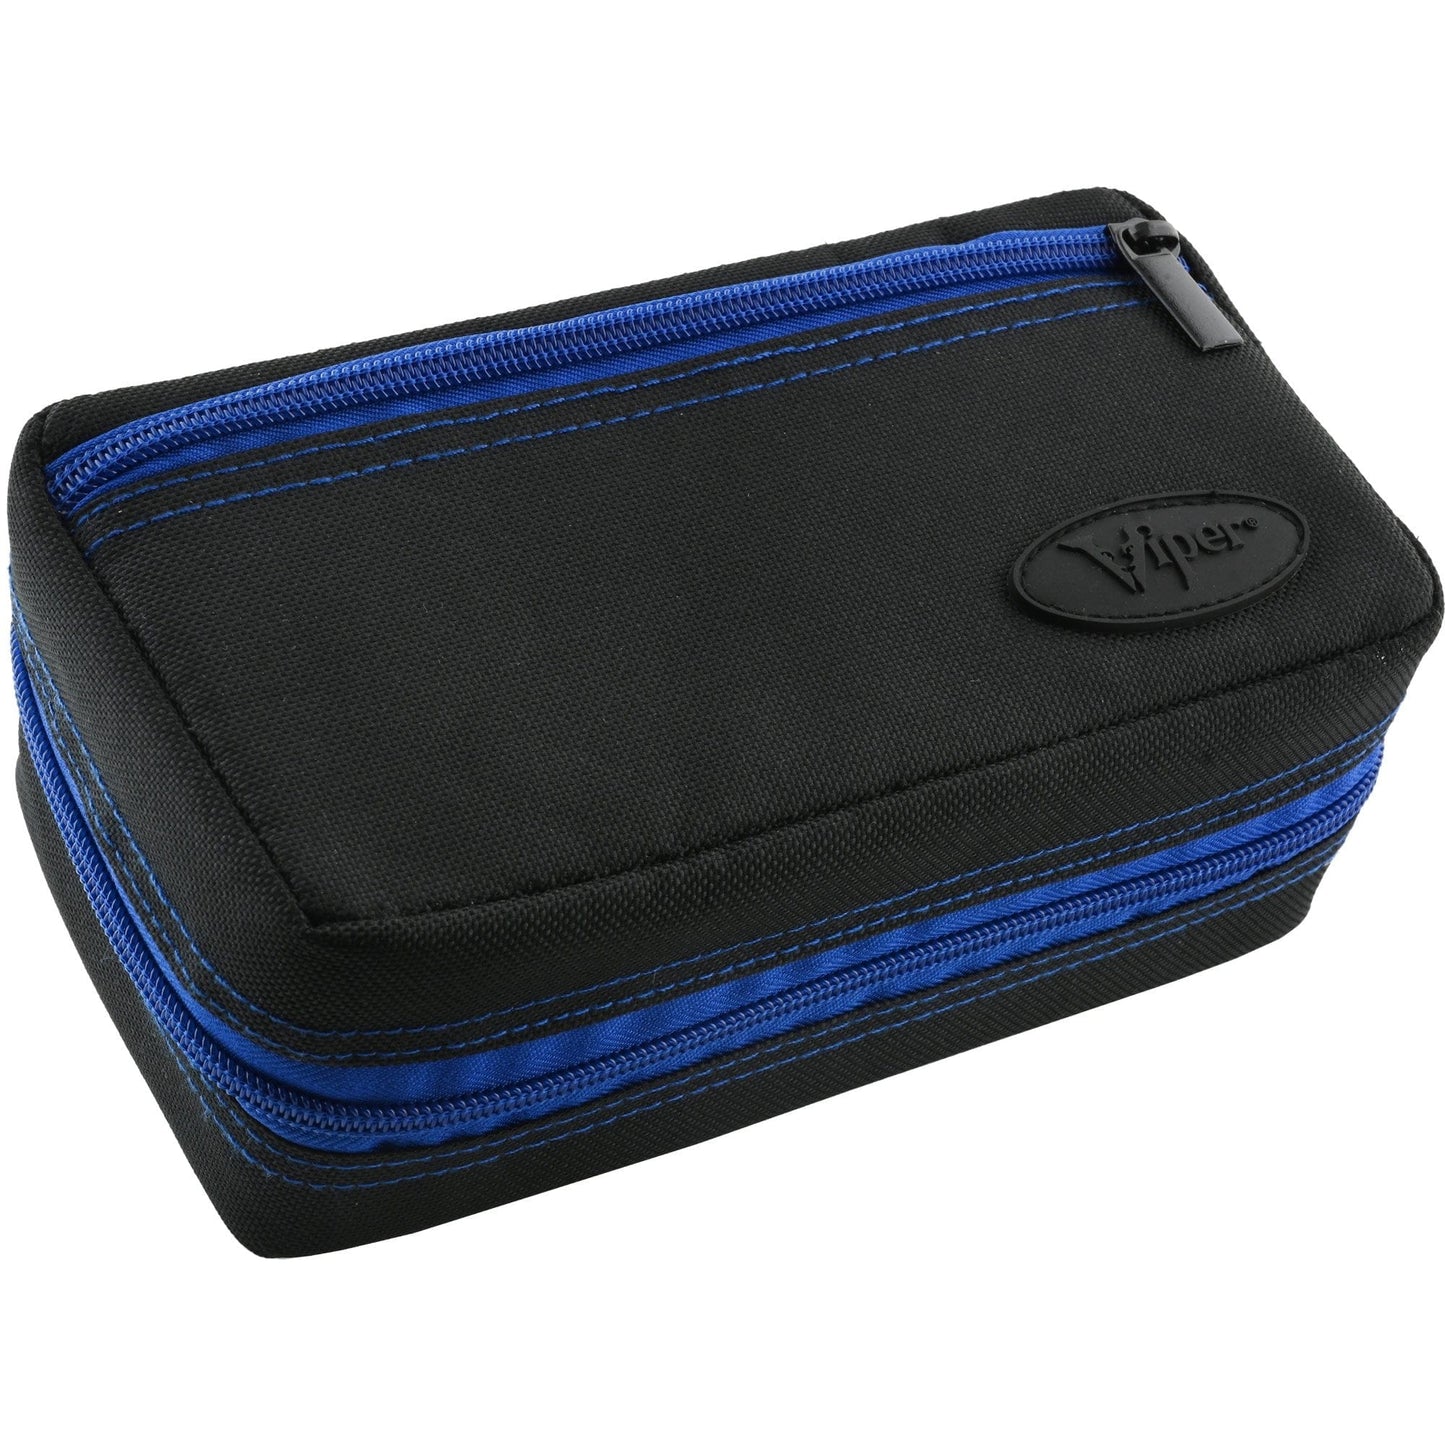 Viper Plazma Pro Dart Case - Extremely Tough & Durable Dark Blue